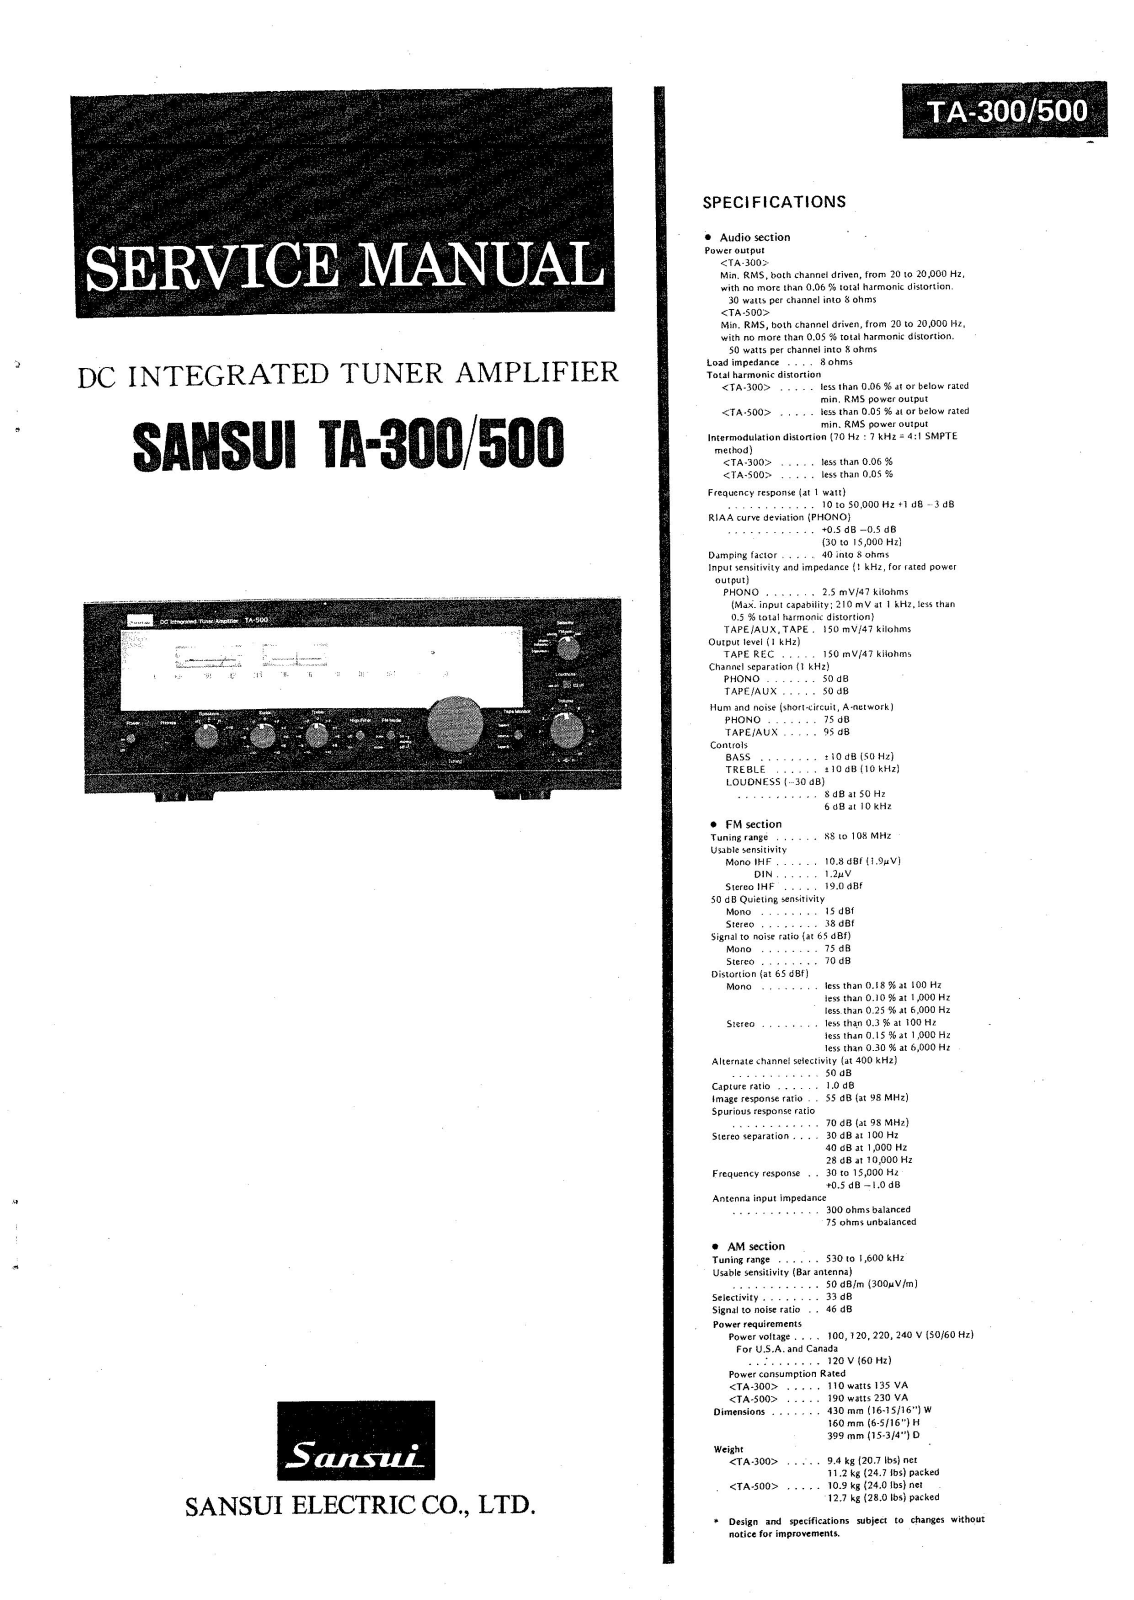 Sansui TA-300 Service Manual